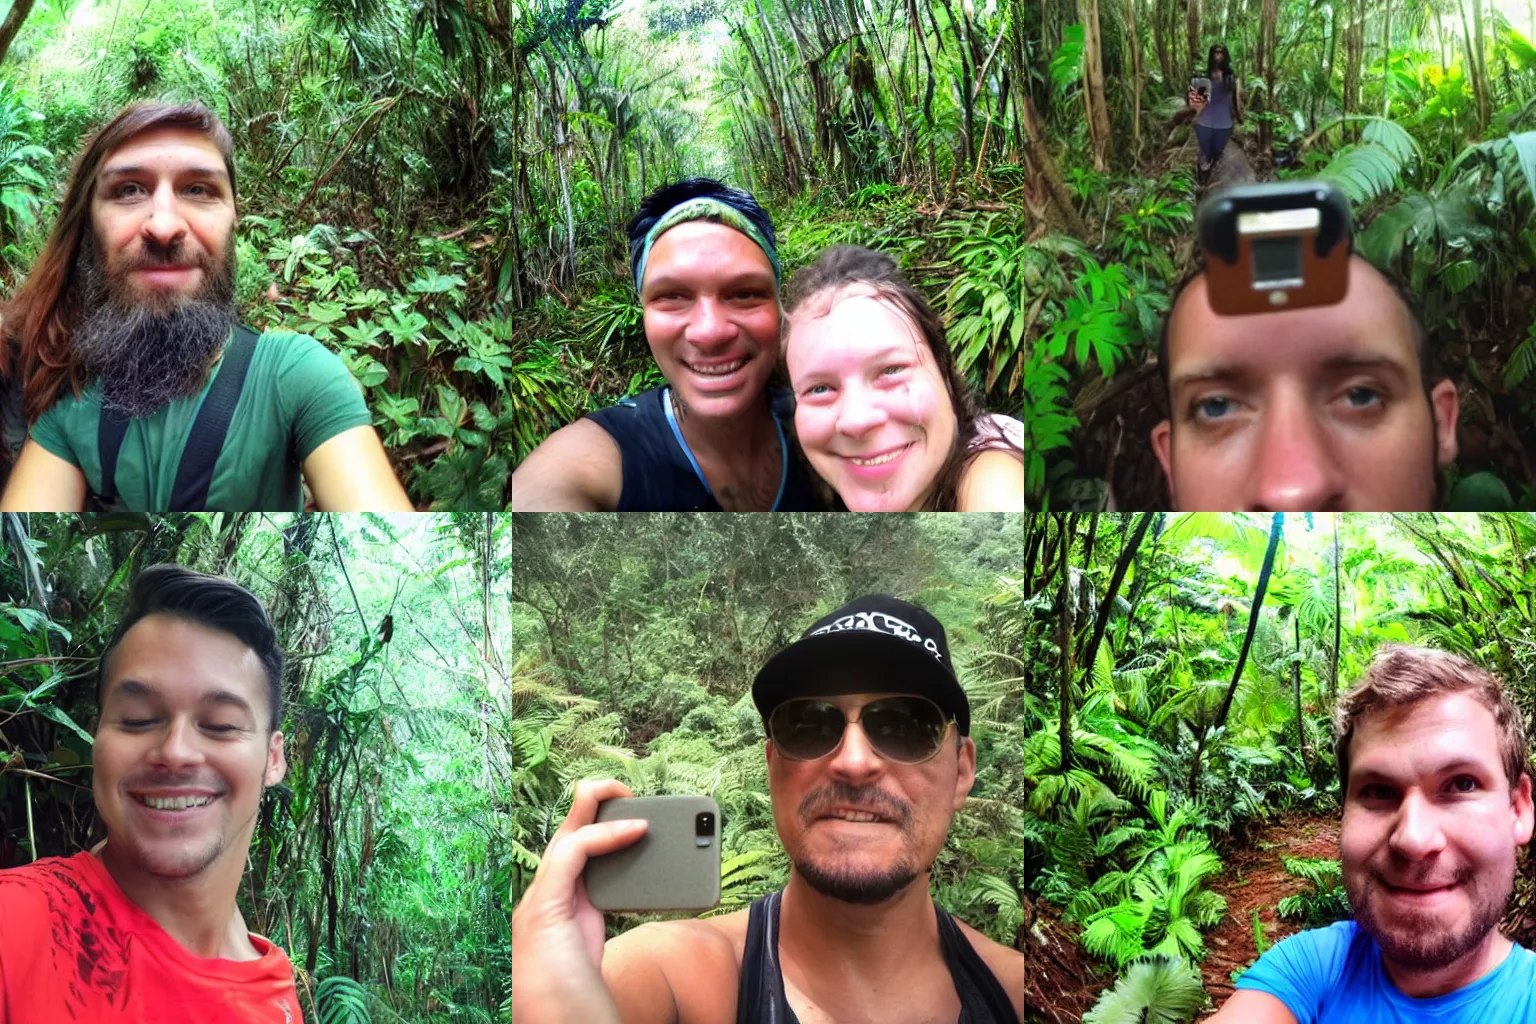 Prompt: Selfie taken in the jungle